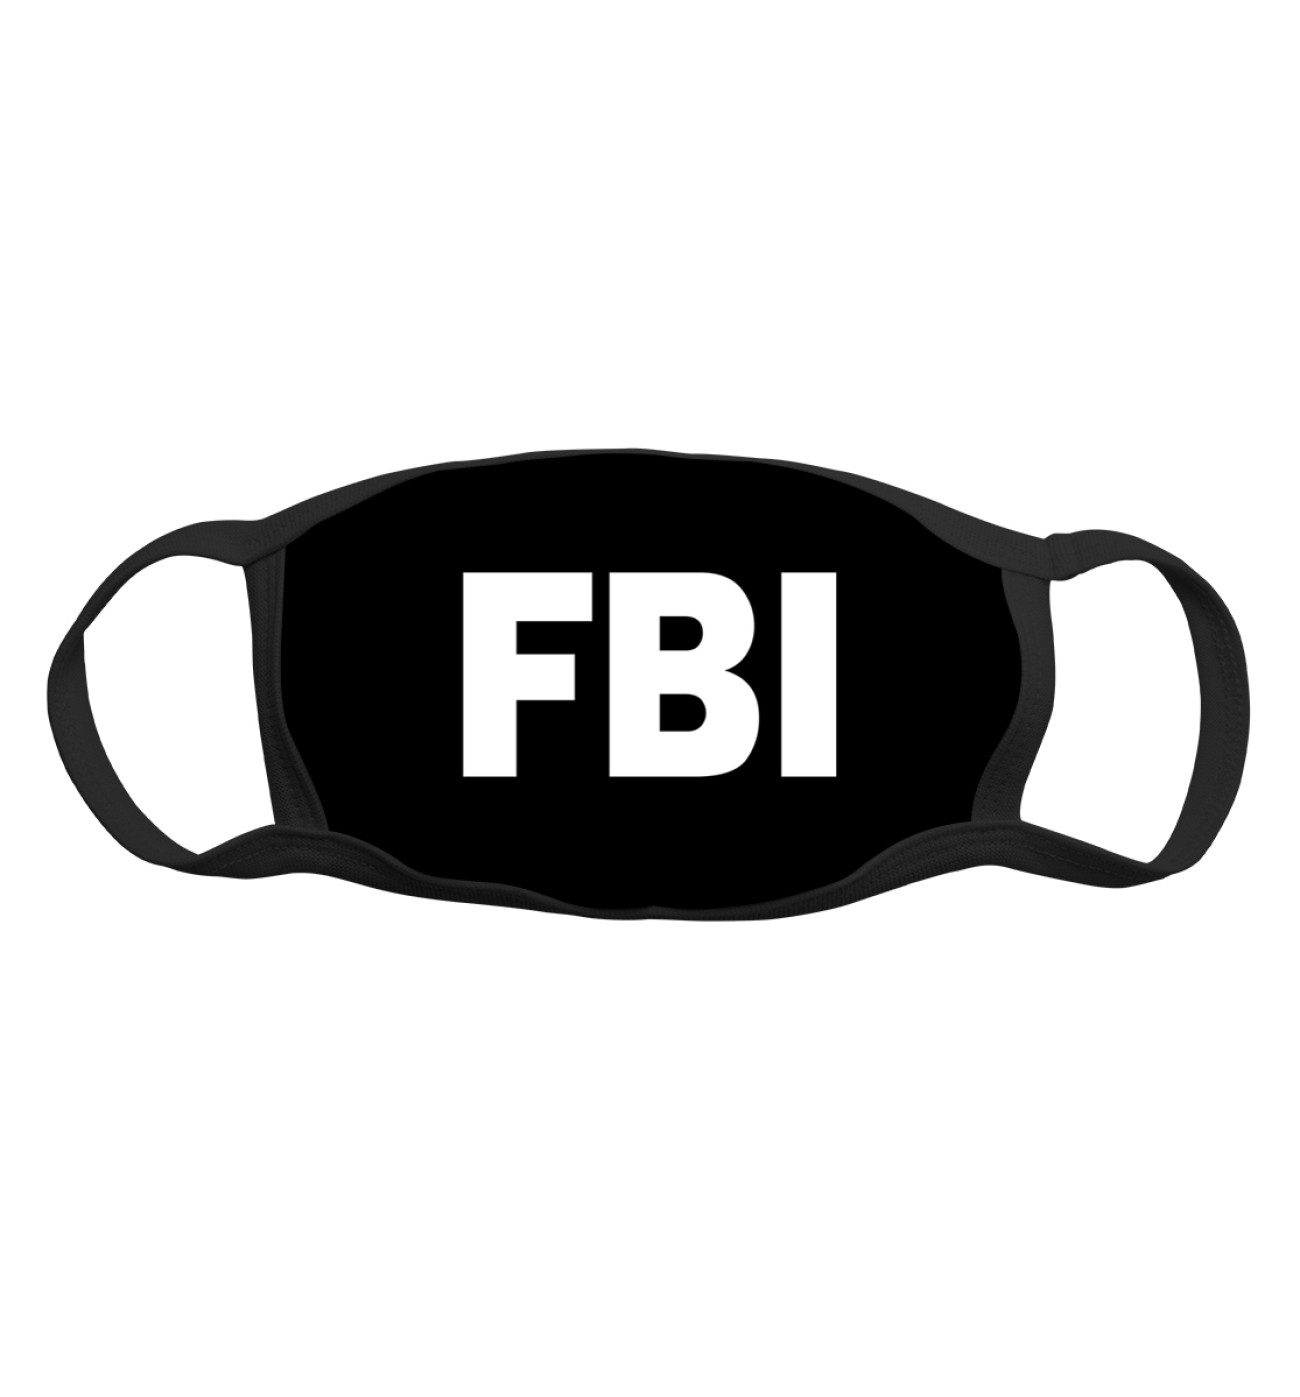 Мужская Маска FBI, артикул: FBI-824198-msk-2